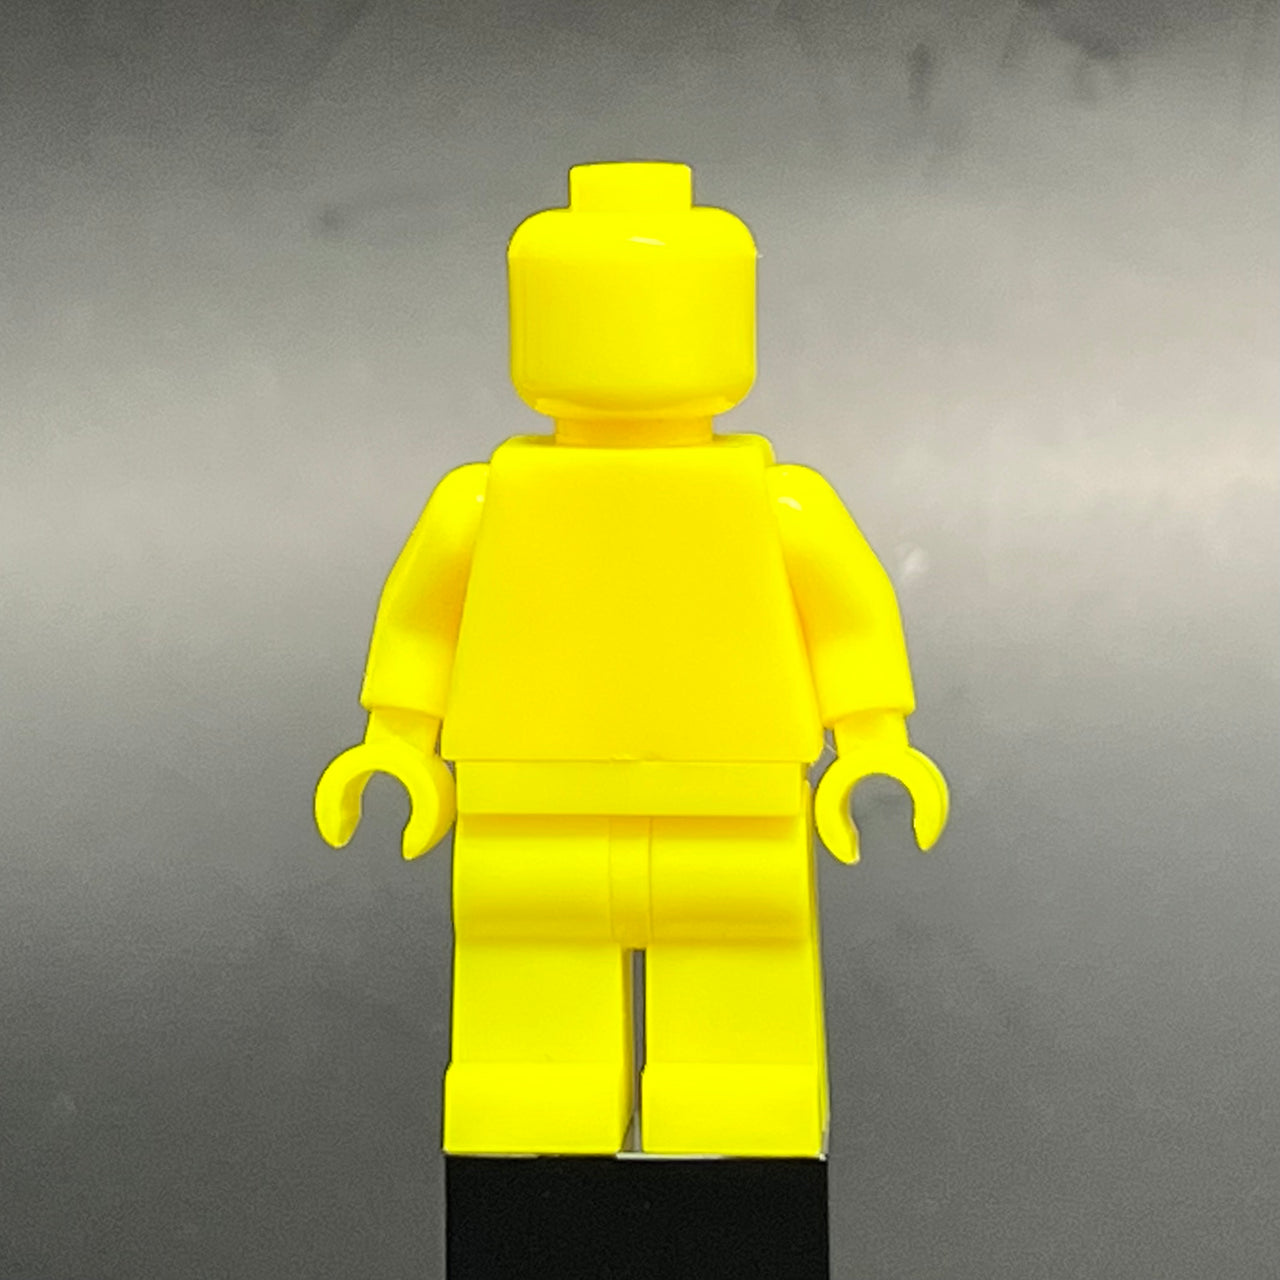 Vibrant Yellow (Neon) Monochrome Figure